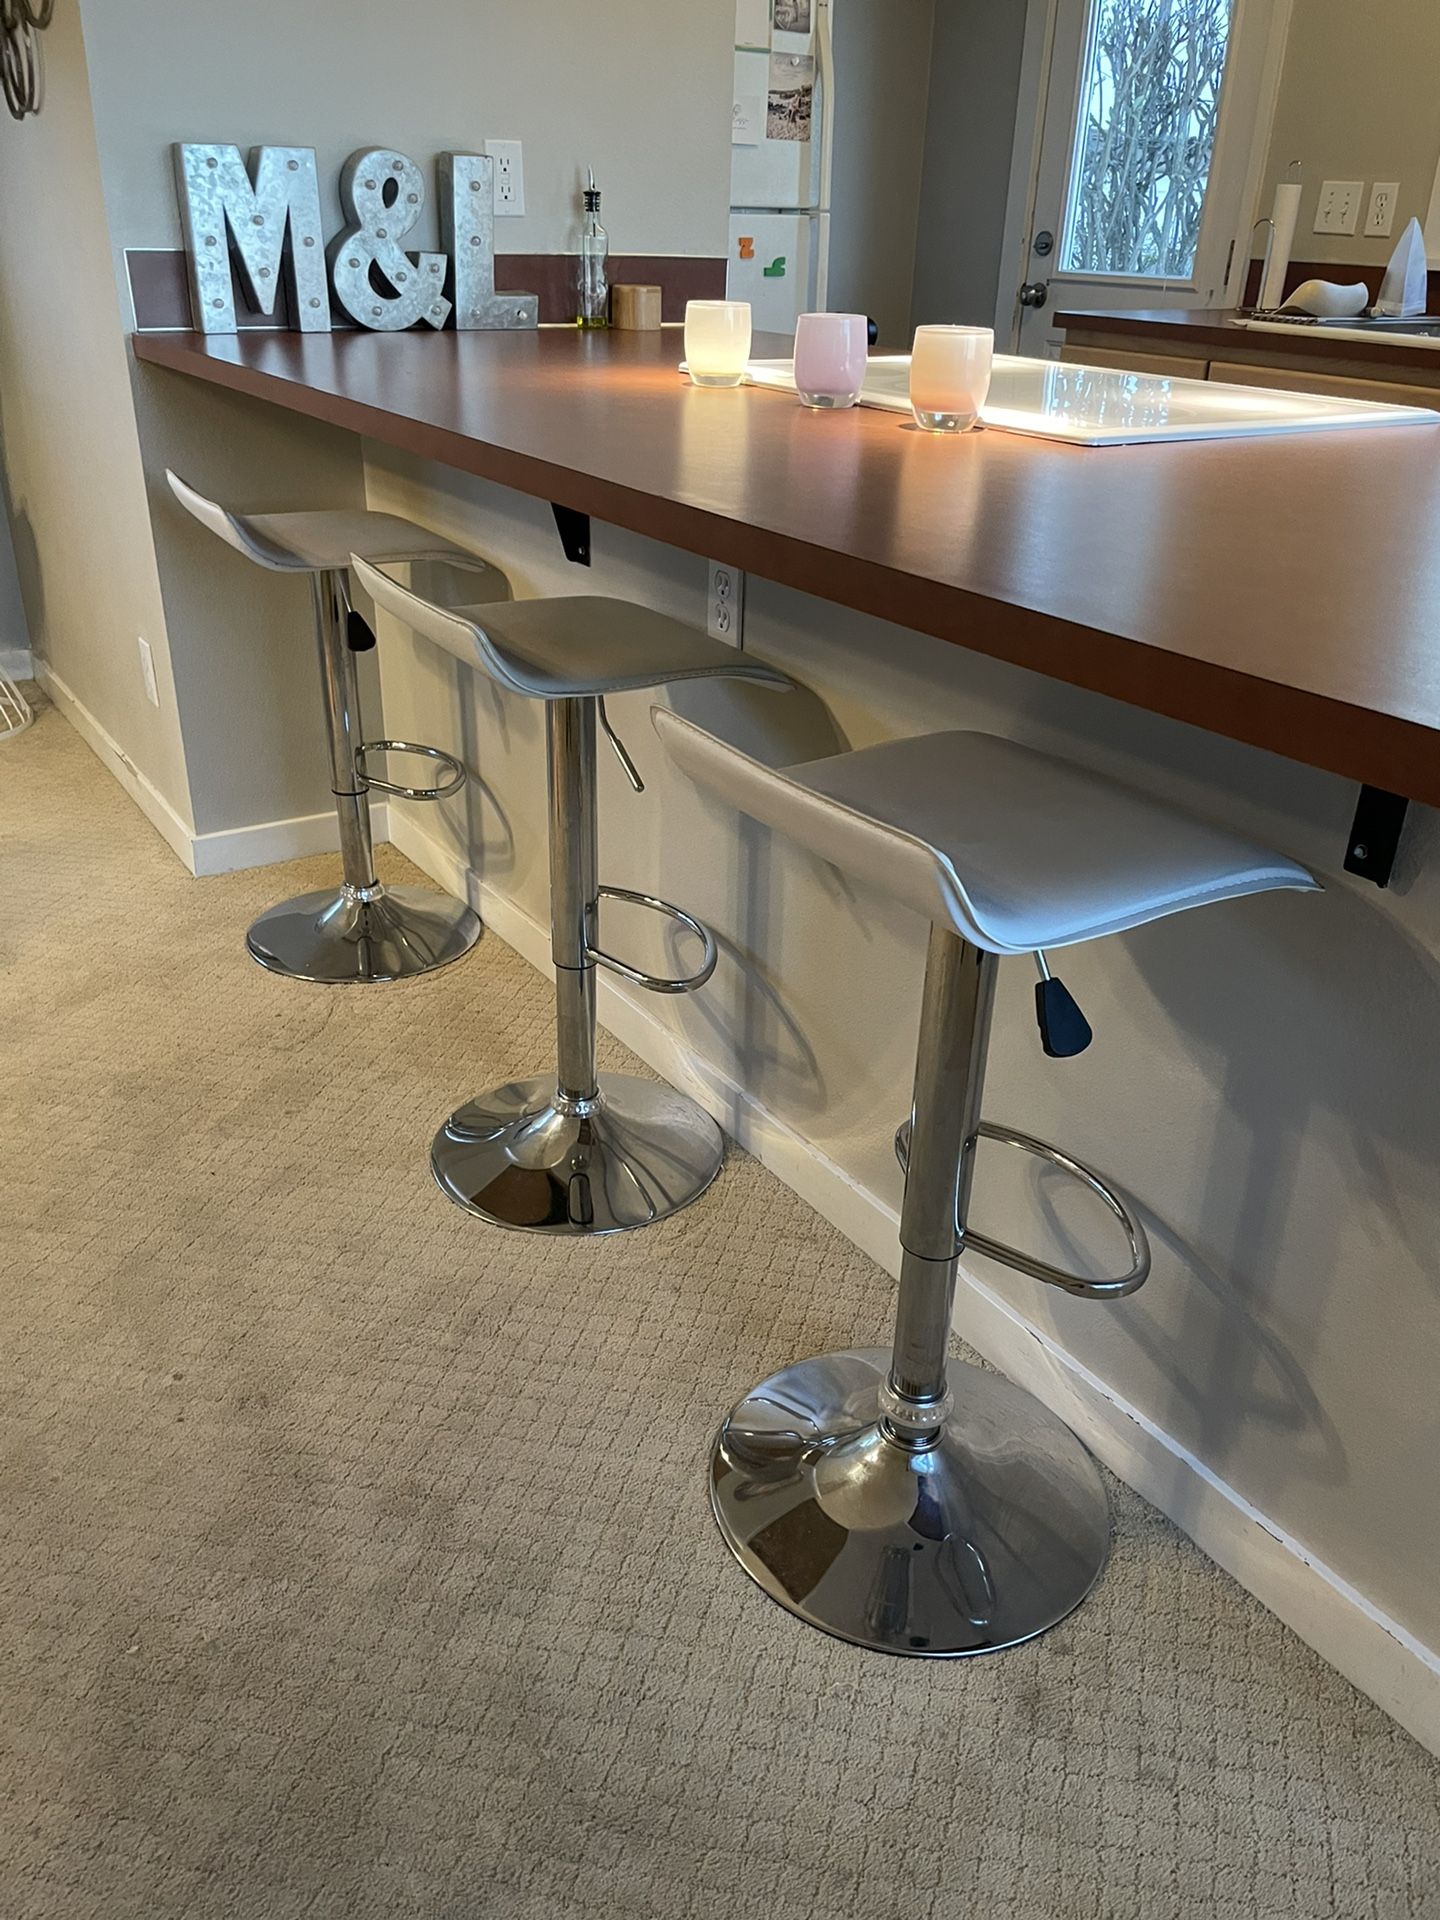 Set of 4 Bar Chairs For Talk Kitchen Bar 